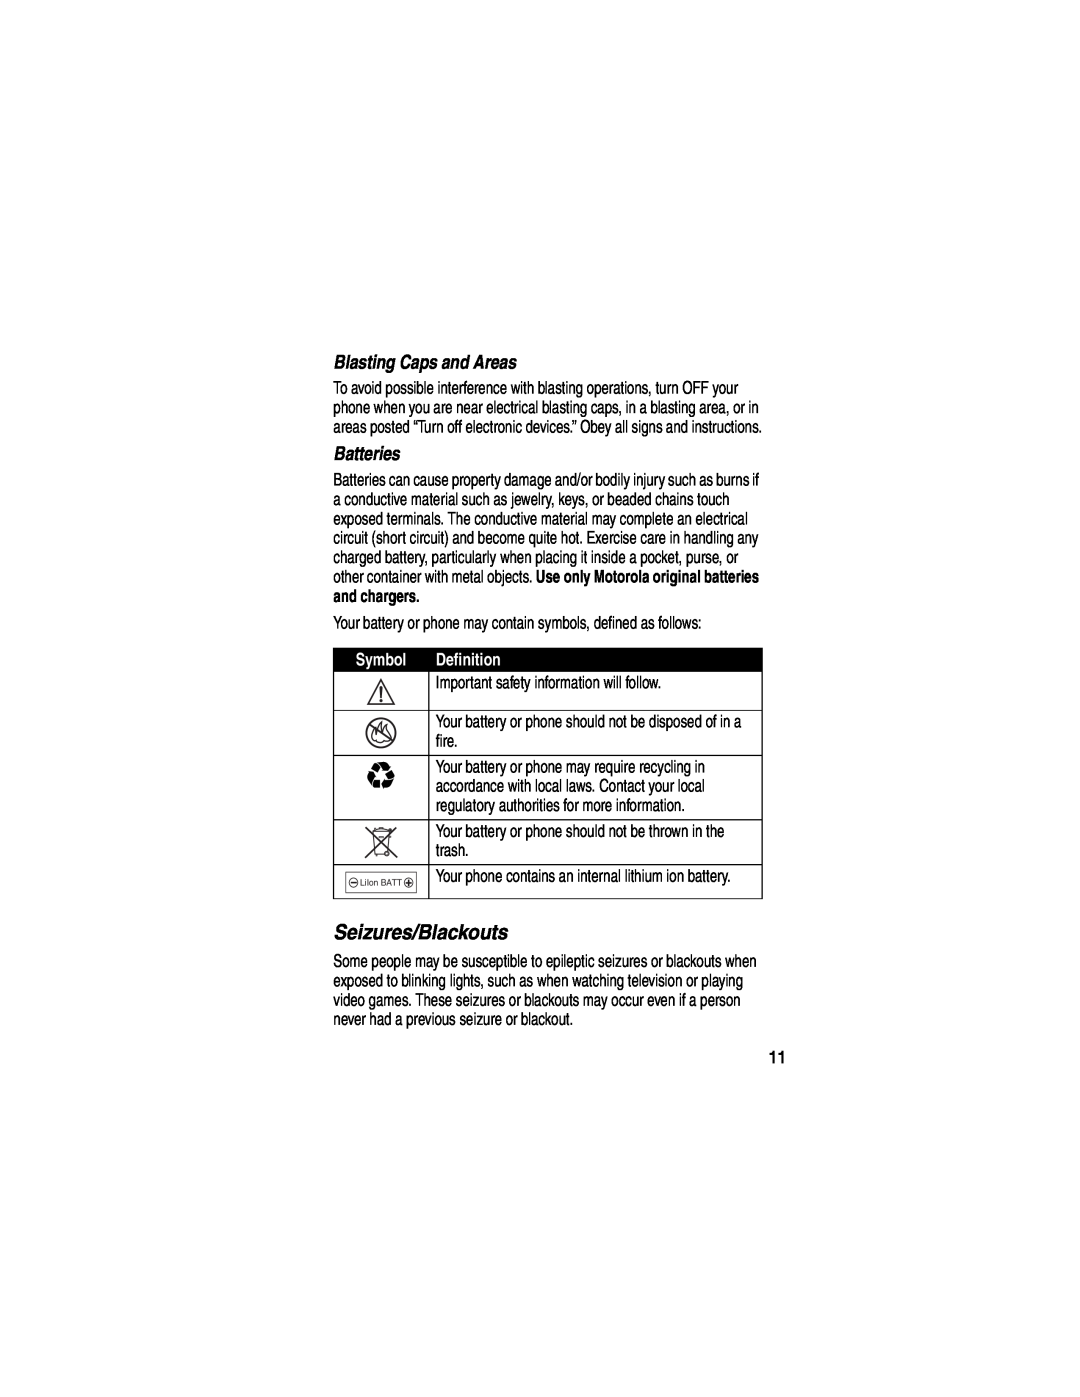 Motorola WIRELESS TELEPHONE manual Seizures/Blackouts, Blasting Caps and Areas, Batteries, Symbol, Definition 